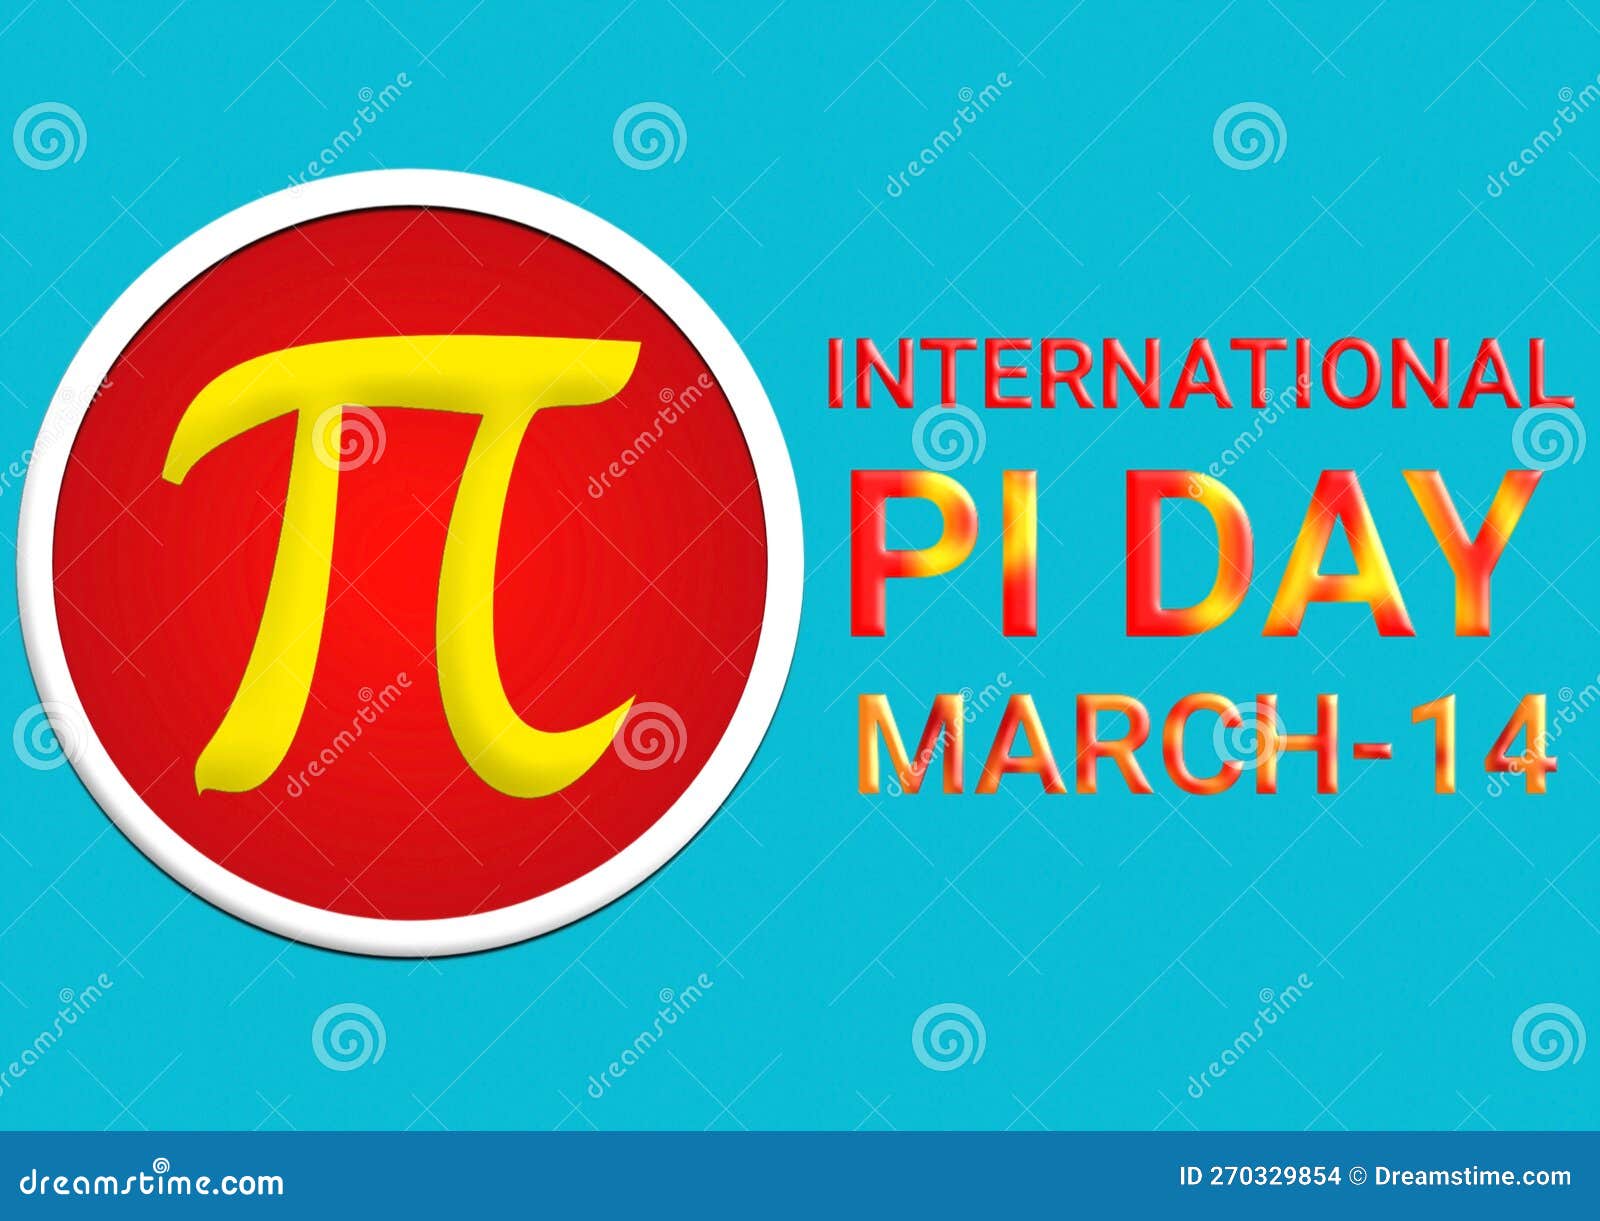 Happy National Pi Day. March 14 Stock Illustration Illustration of